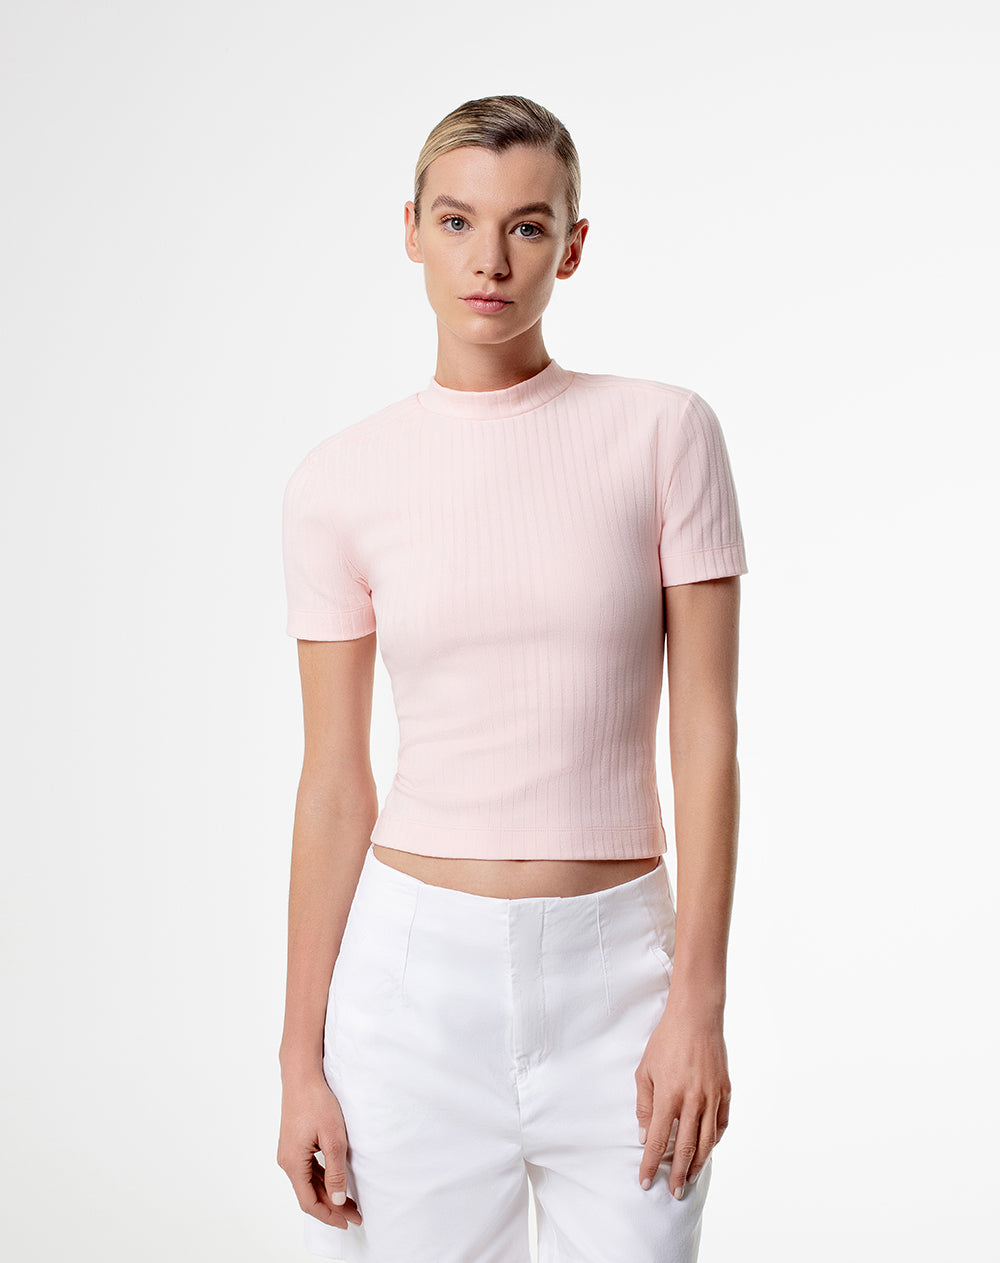 Camiseta slim fit manga corta rosada